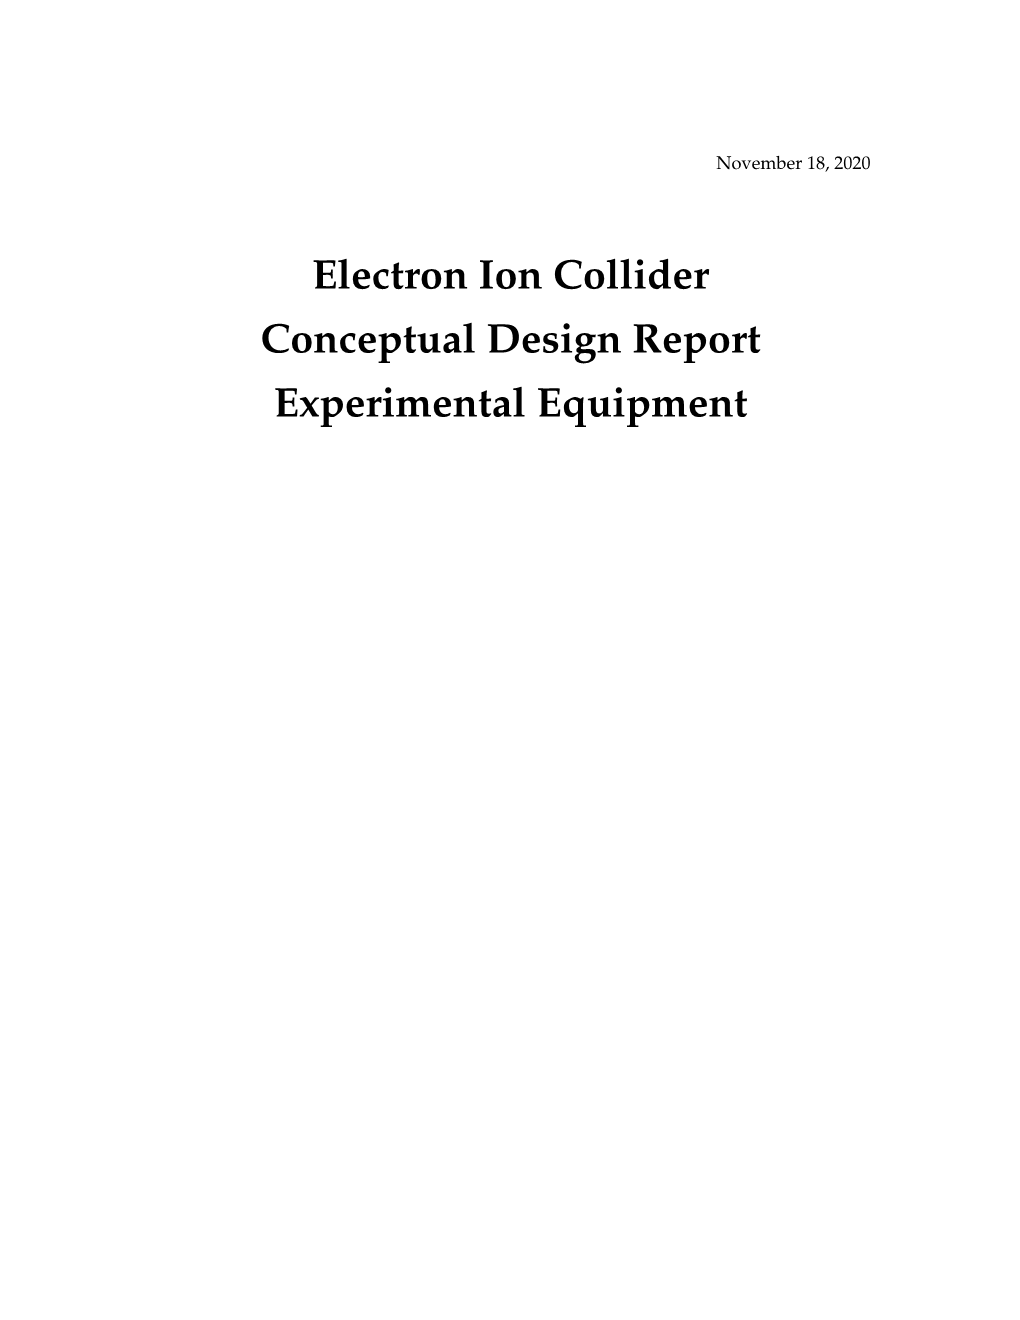 Electron Ion Collider Conceptual Design Report Experimental Equipment Contributors: W